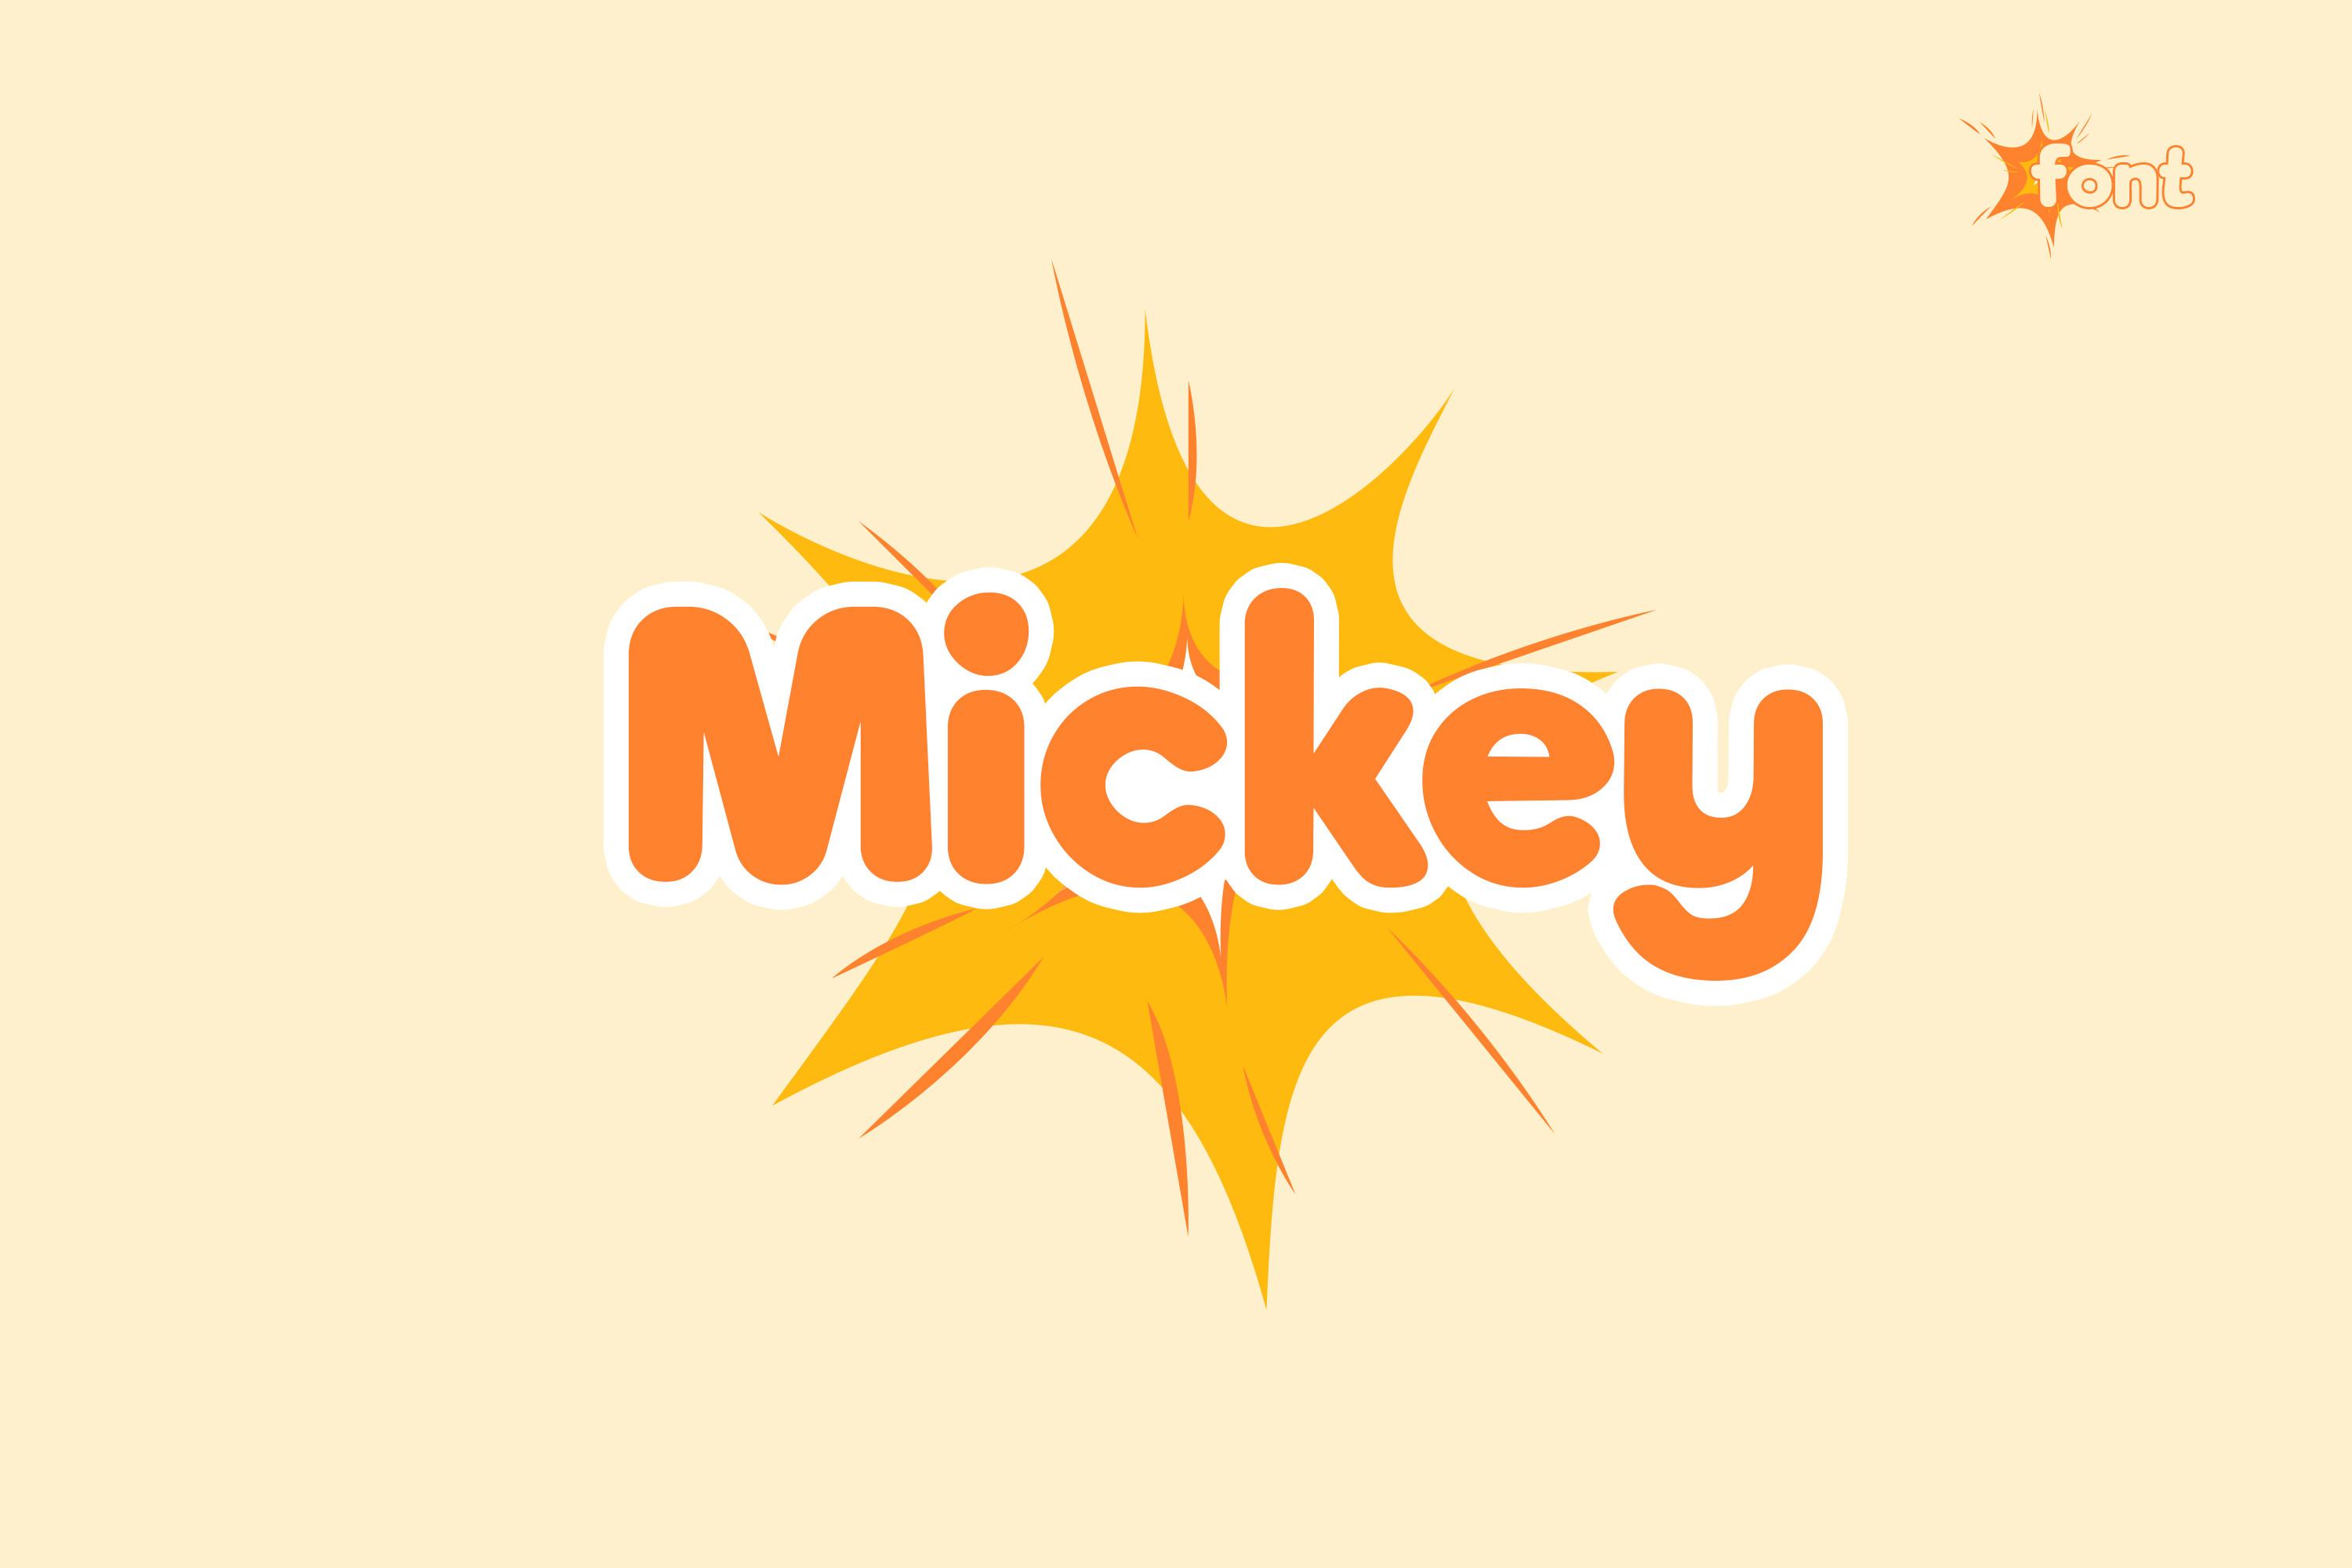 Mickey Font